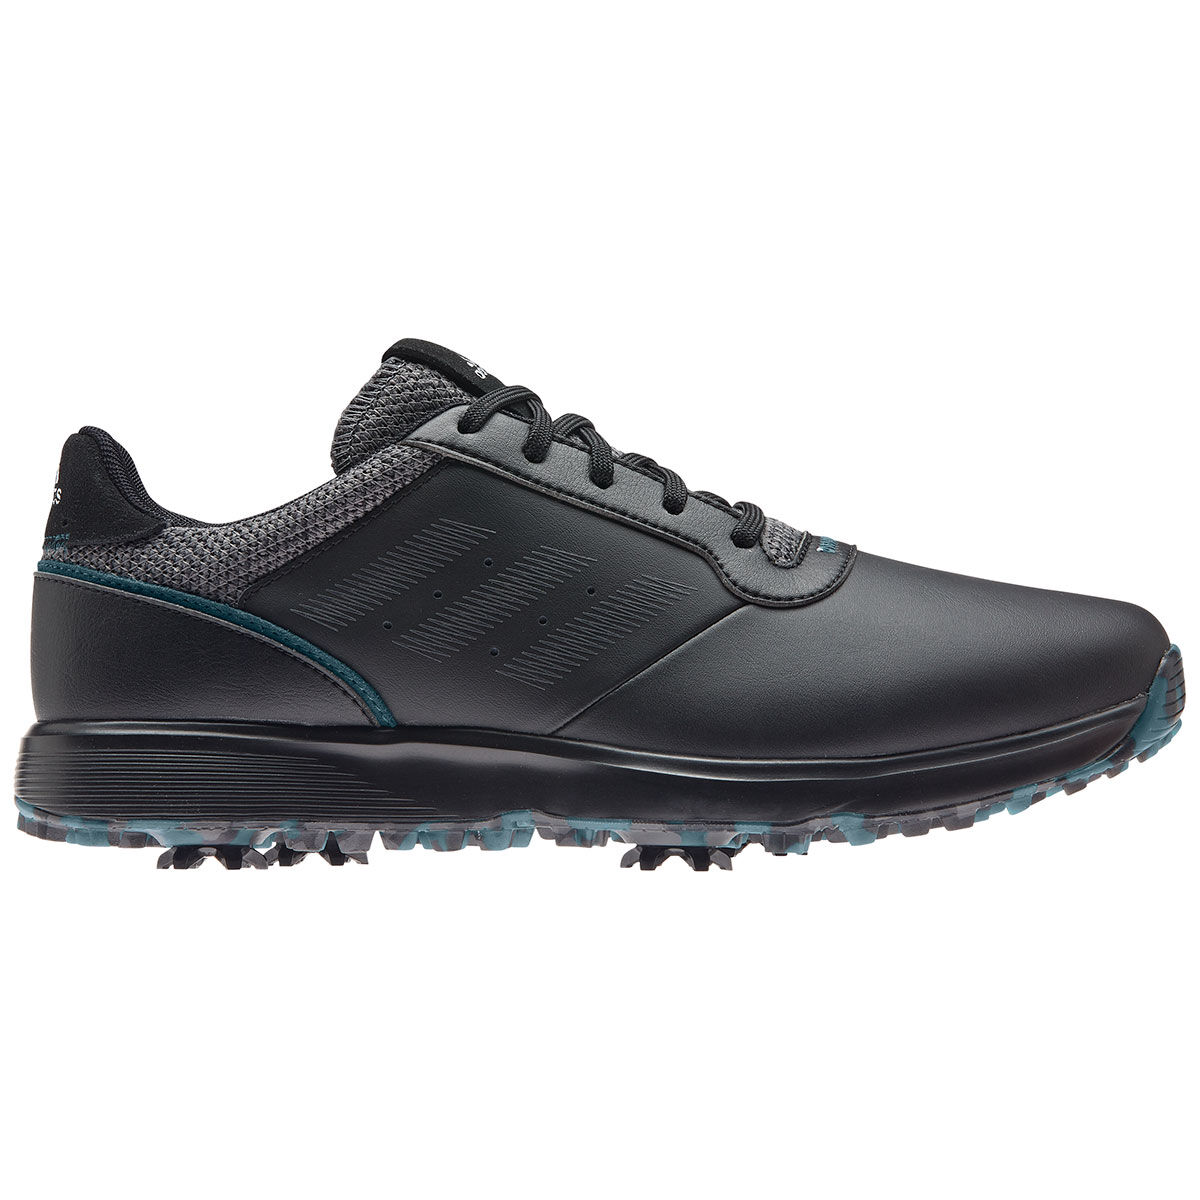 Chaussures adidas Golf S2G cuir, homme, 8, Black/grey/teal | Online Golf